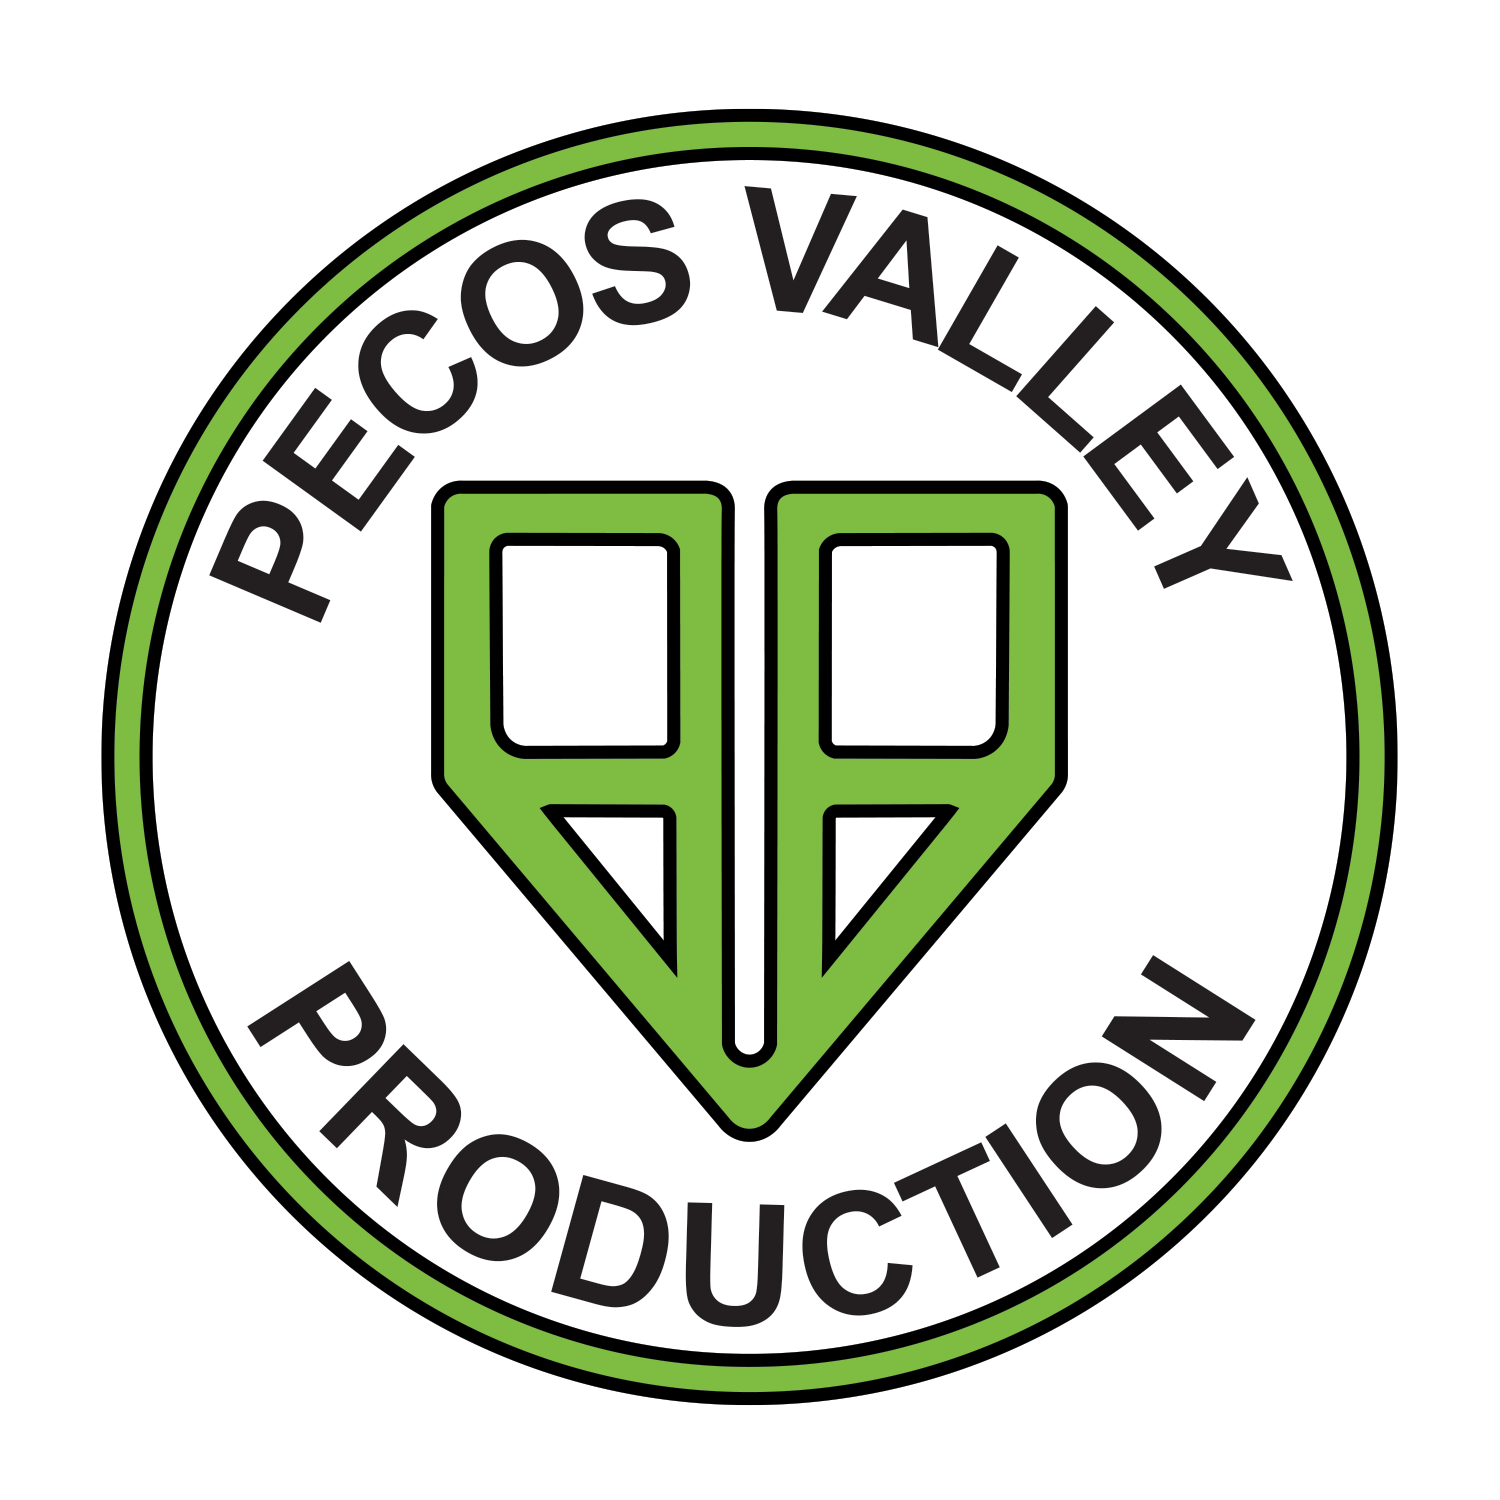 Pecos Valley Production- Sunland Park